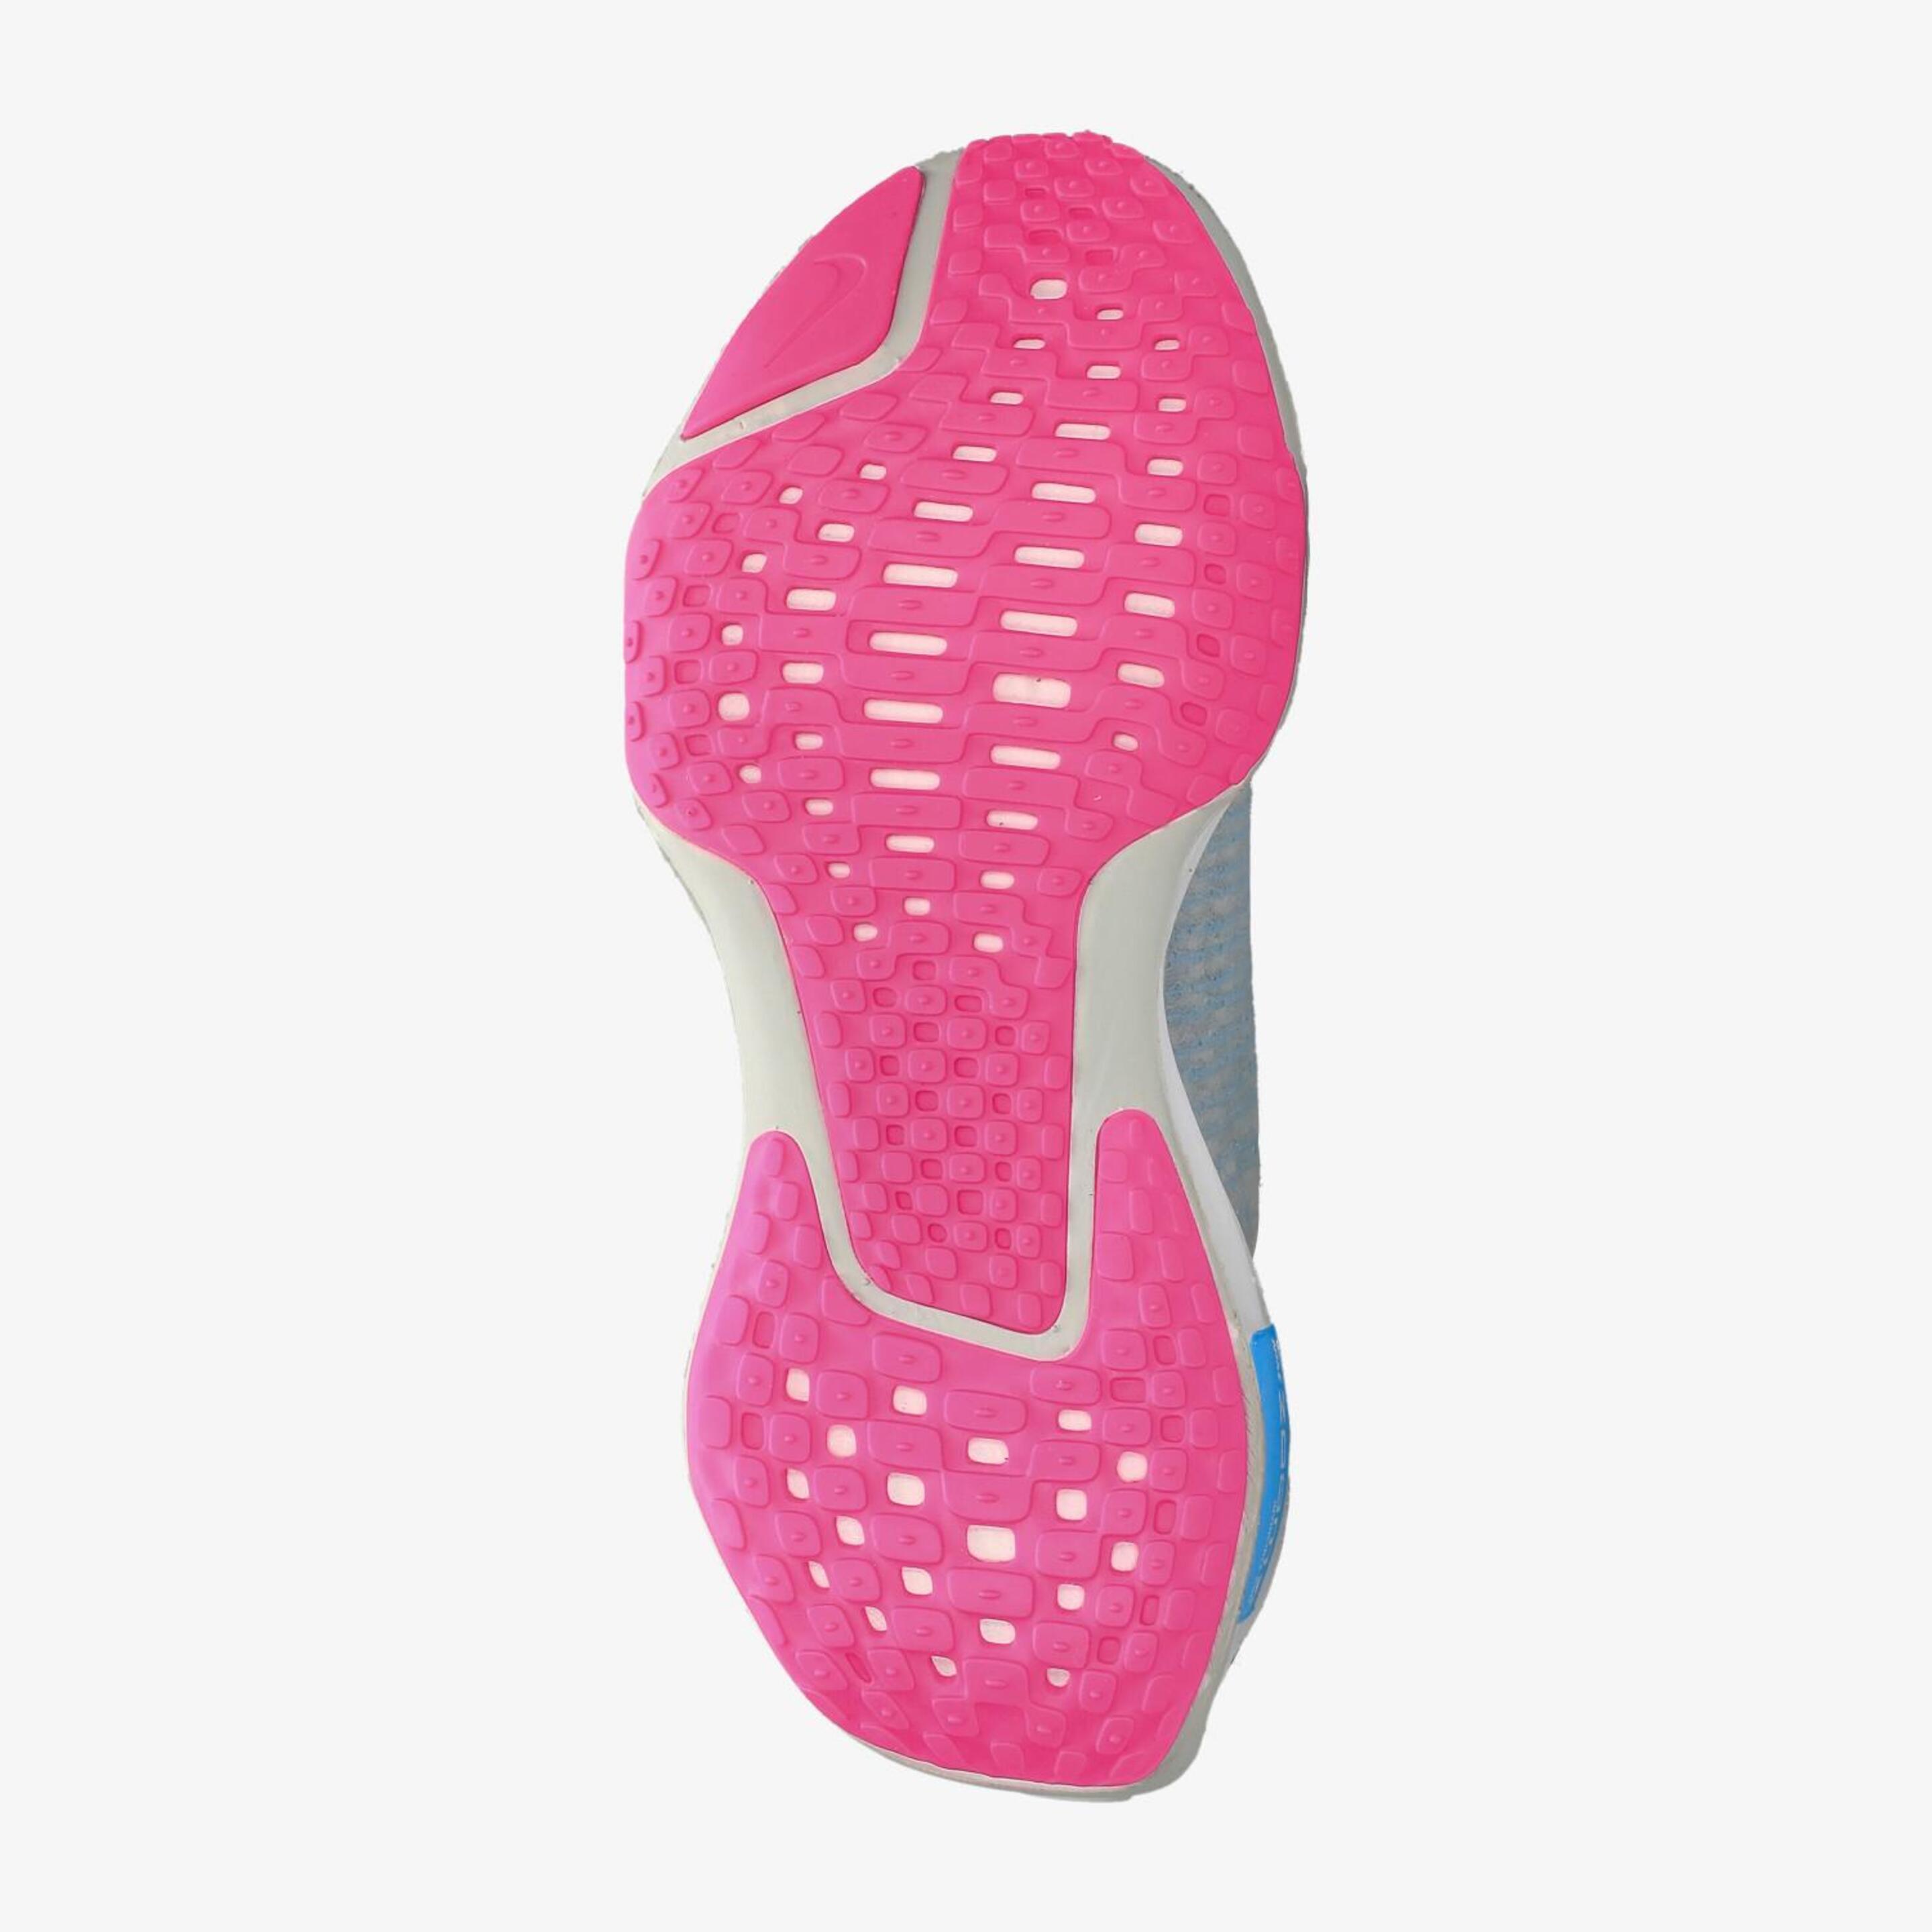 Nike Invincible 3 - Blanco - Zapatillas Running Mujer  | Sprinter